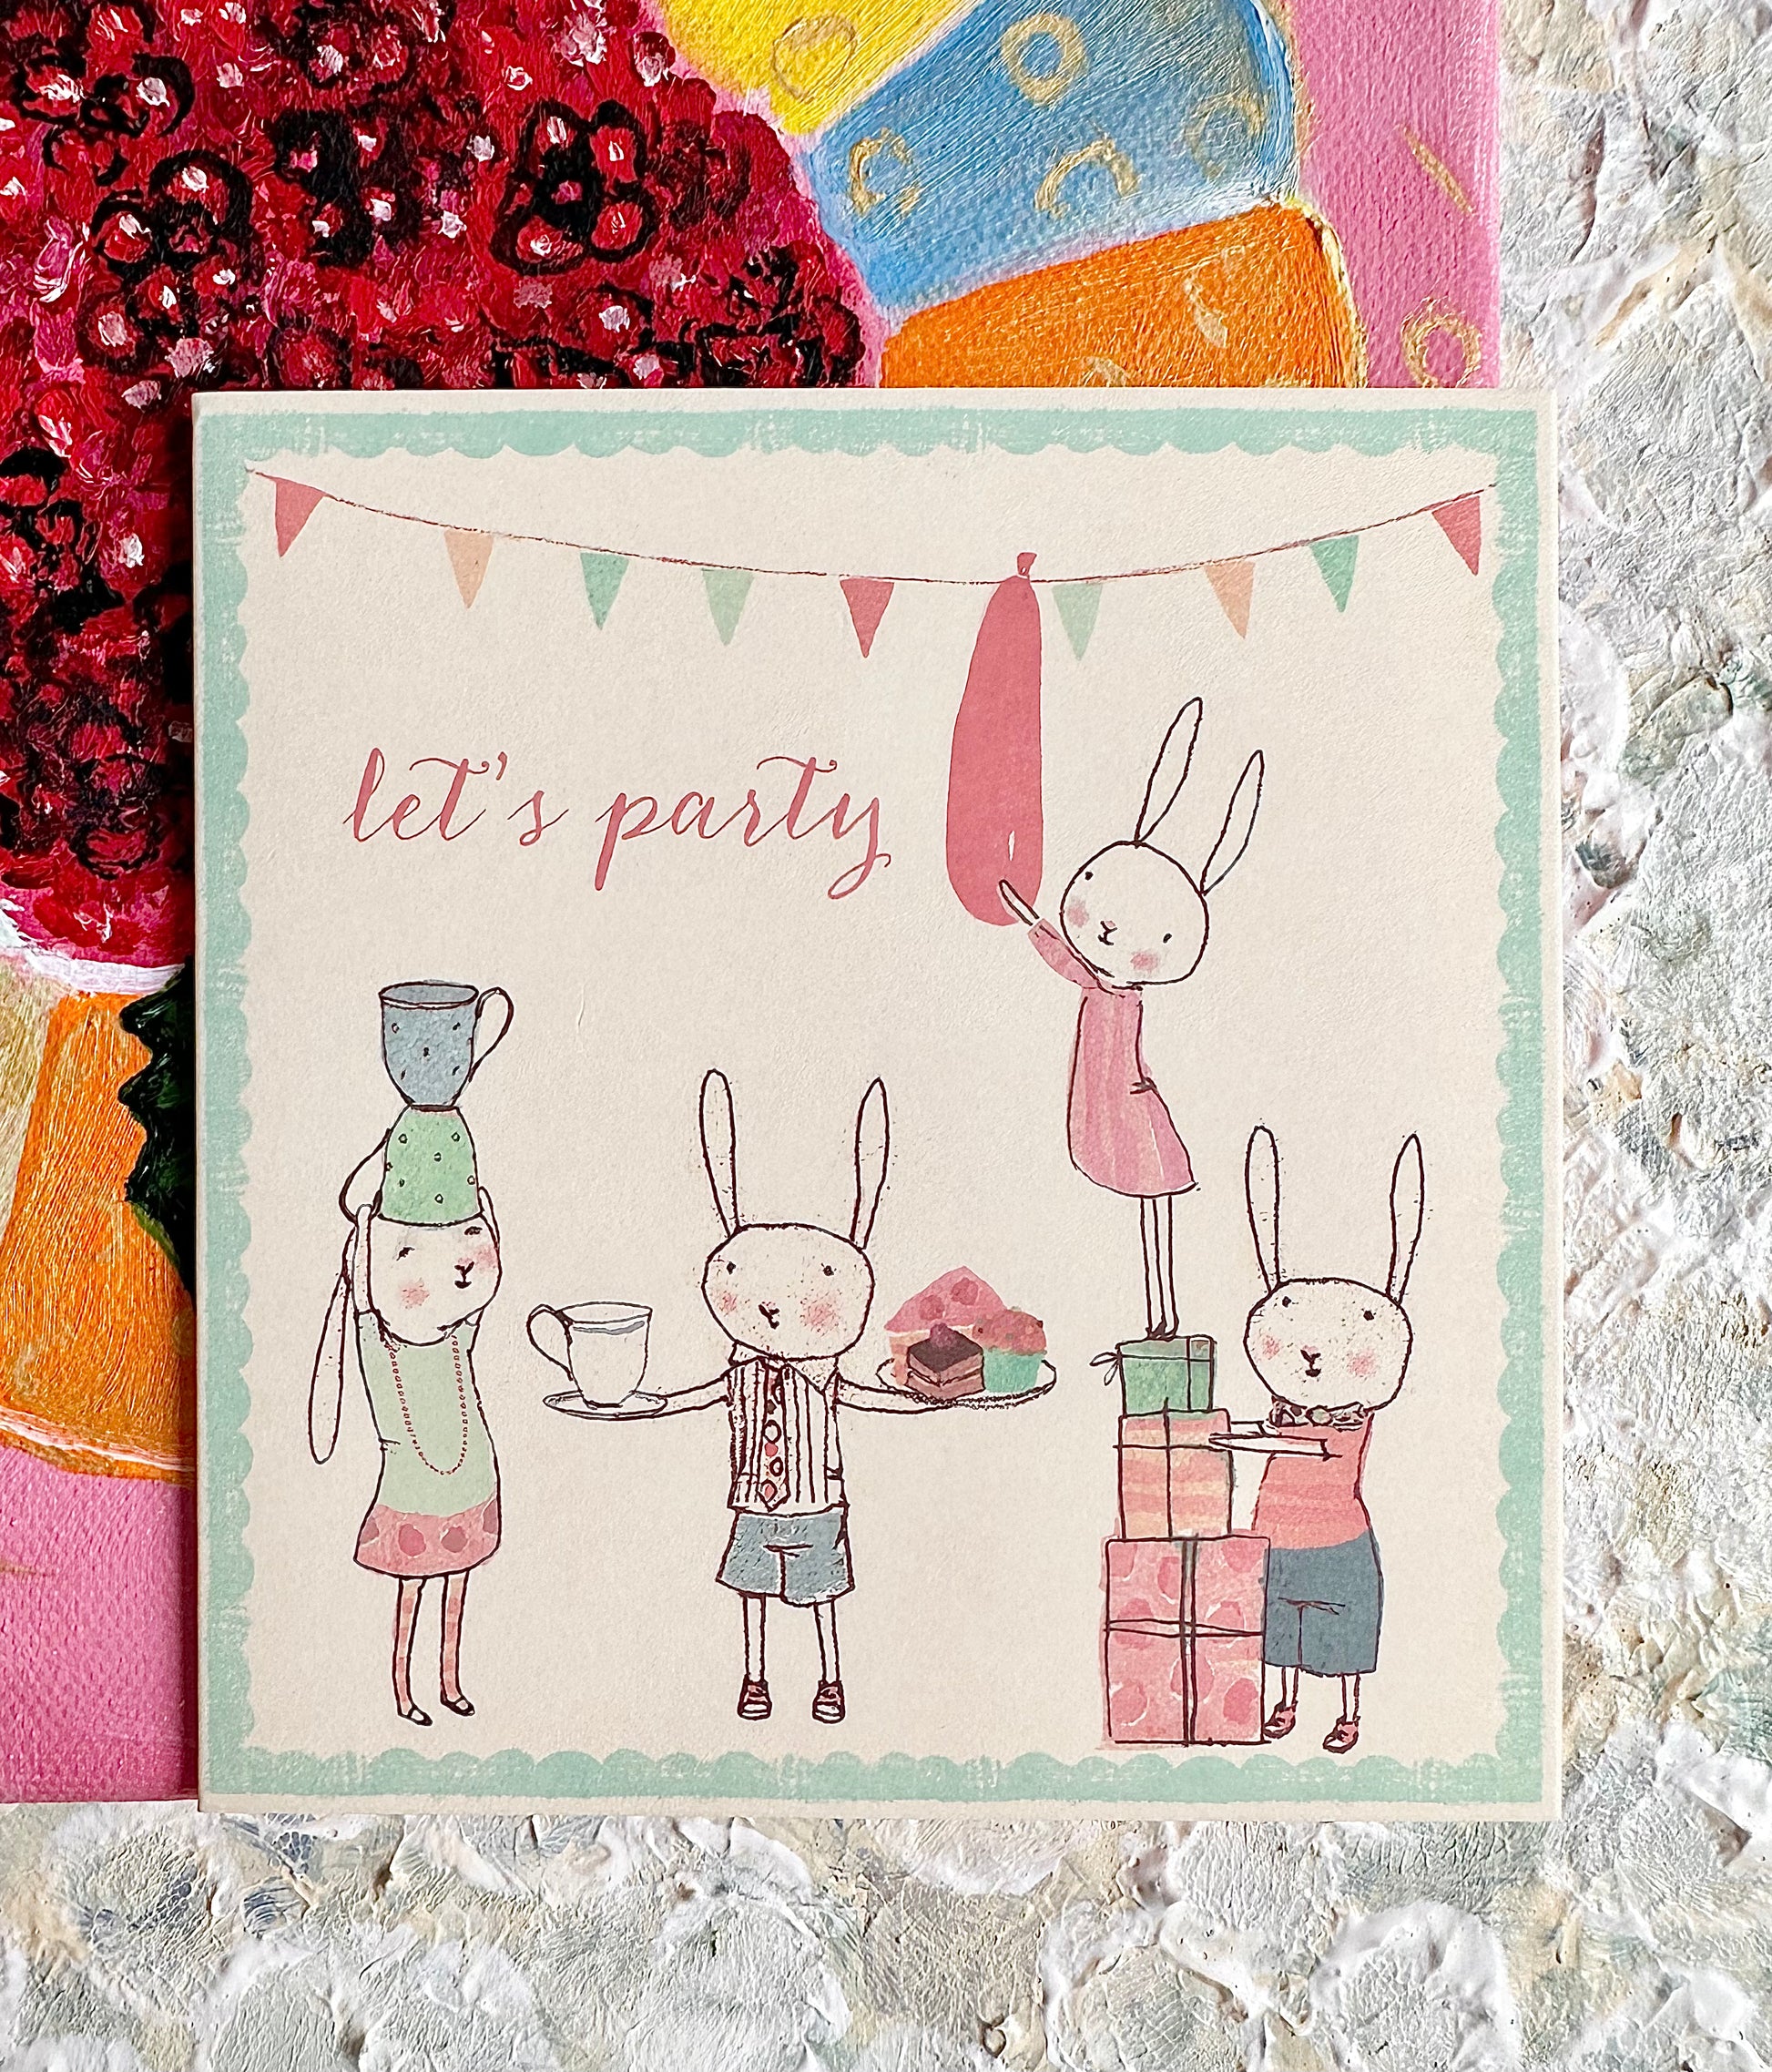 Double Card “Let’s party Celebrations” - 2015